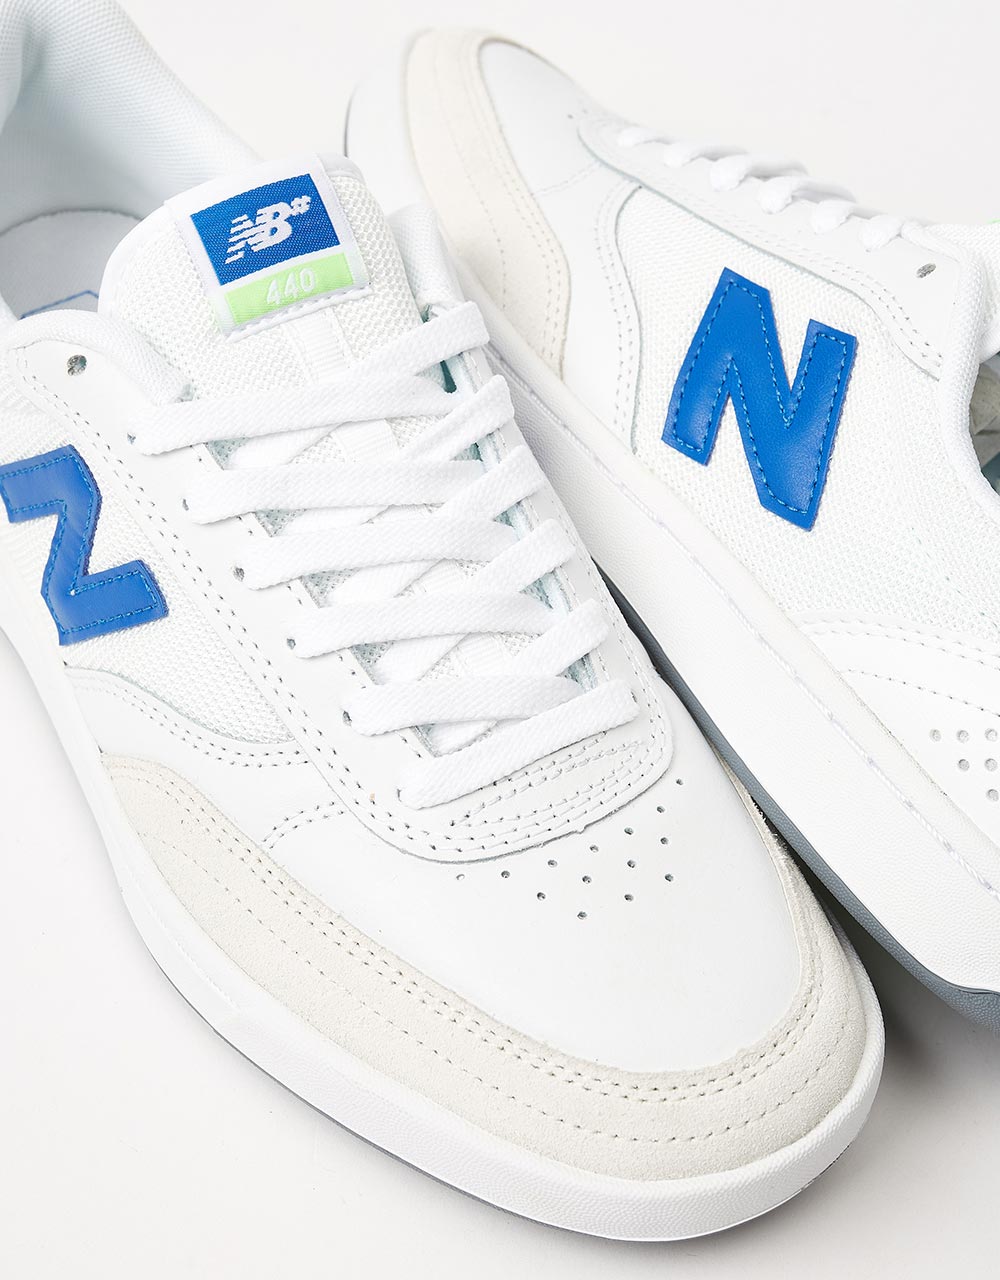 New Balance Numeric 440 Skate Shoes - White/Royal